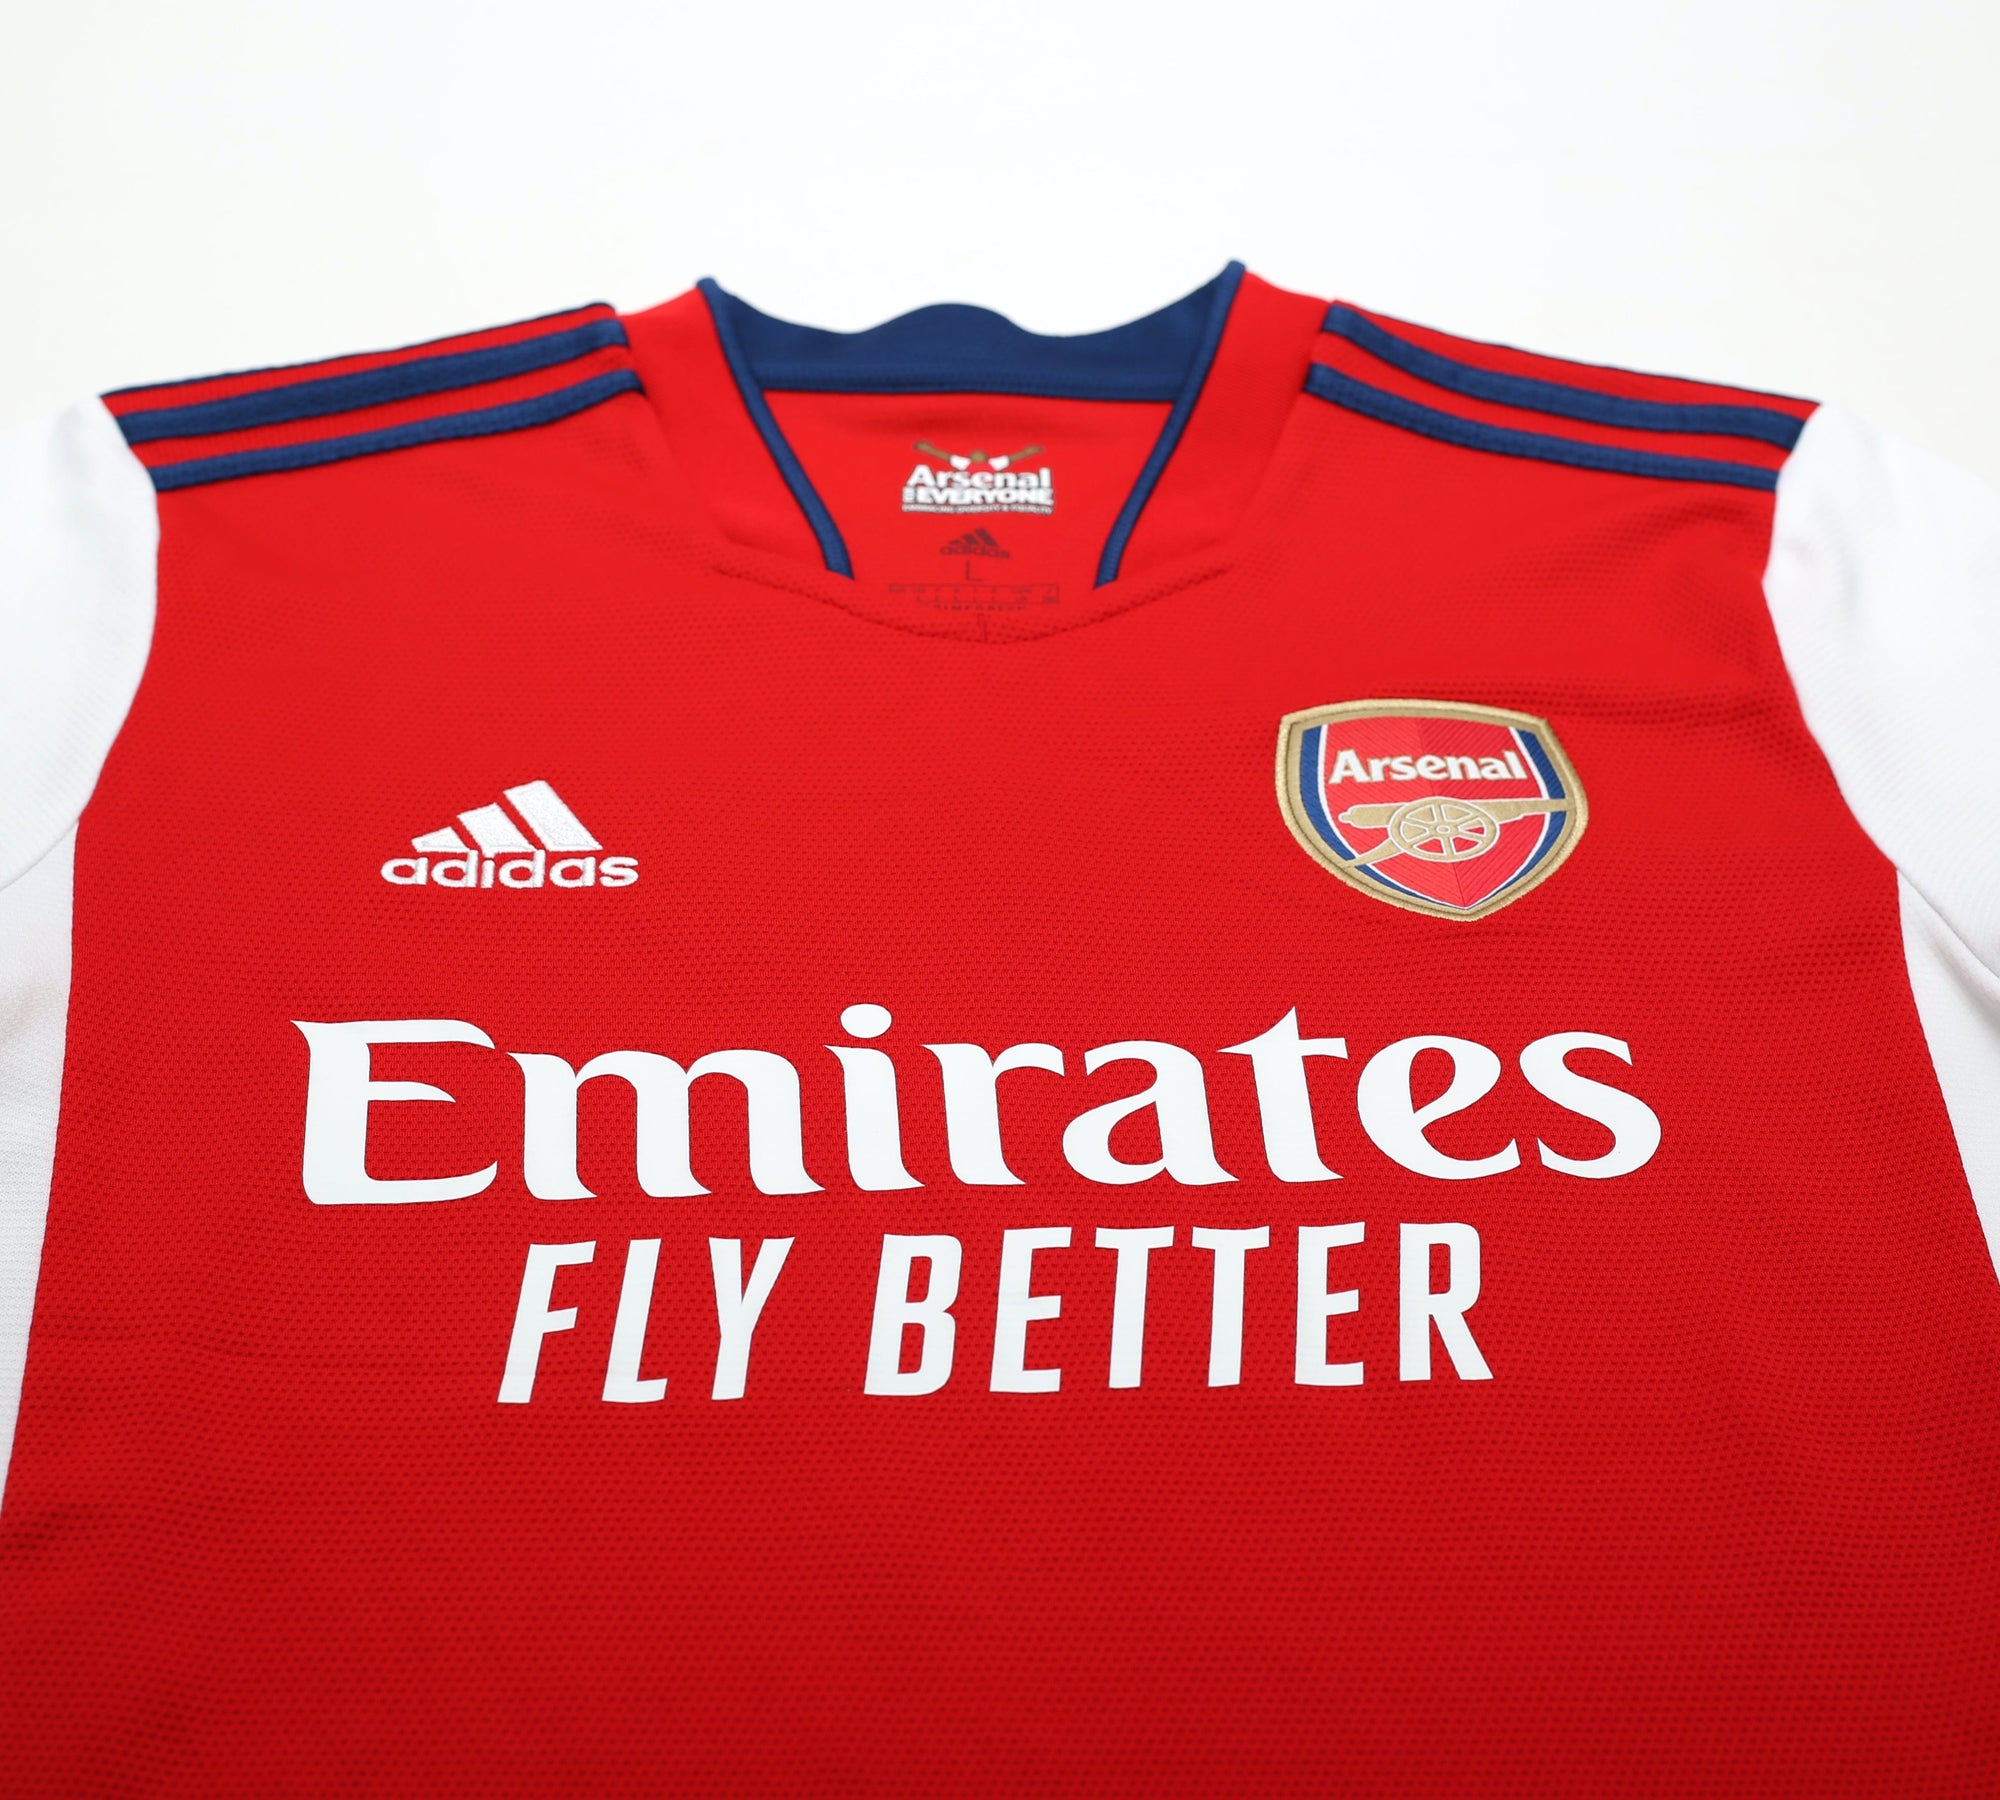 2021/22 SAKA #7 Arsenal Adidas Home Football Shirt (L)